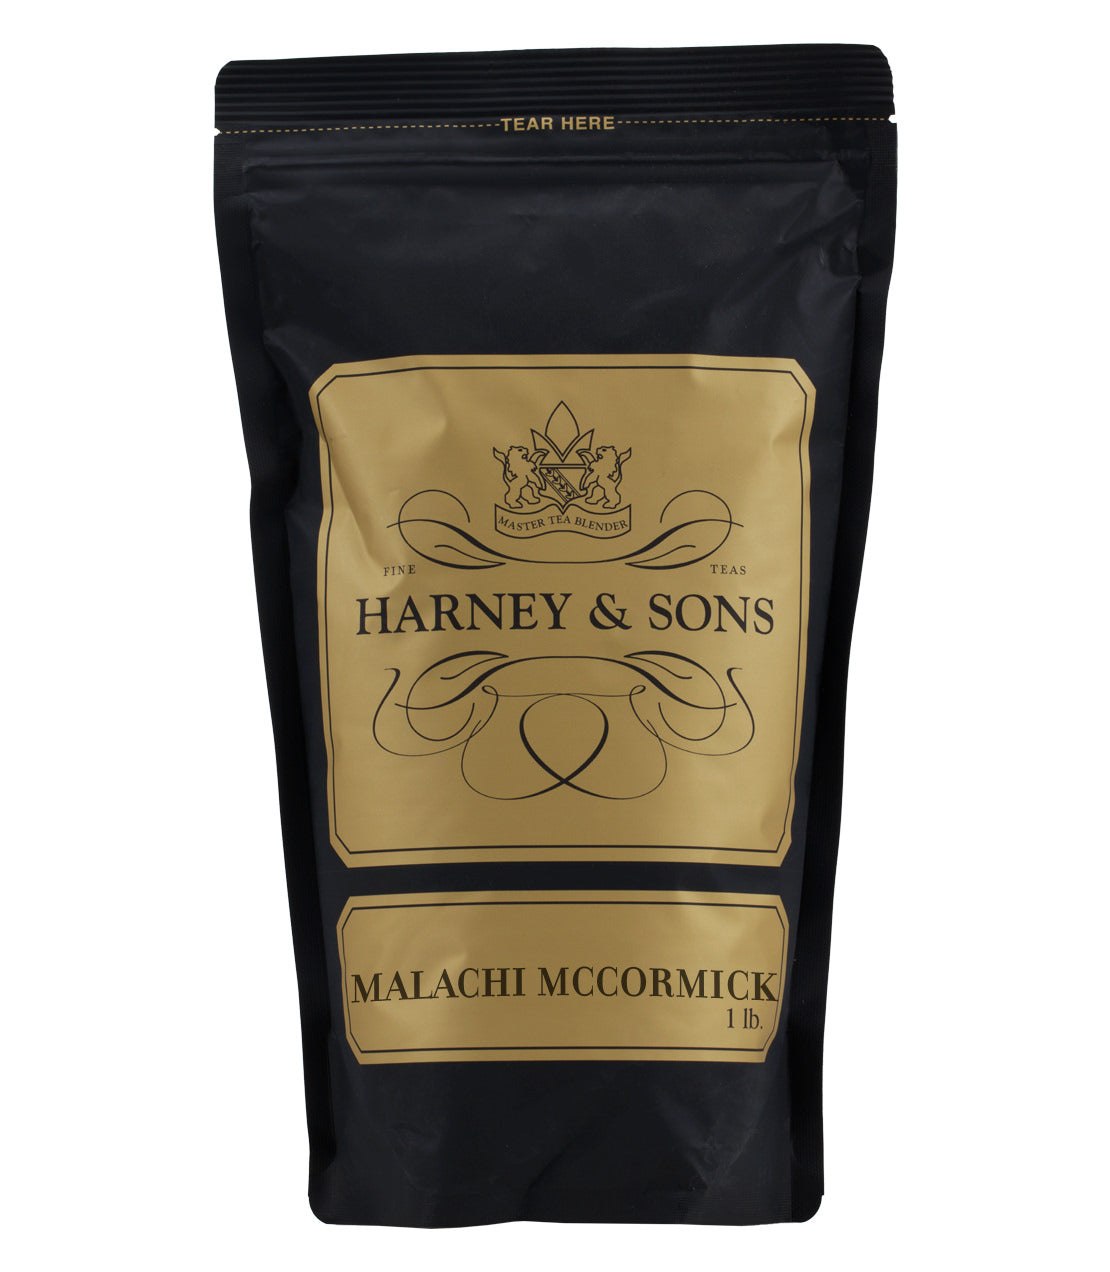 Malachi McCormick - Loose 1 lb. Bag - Harney & Sons Fine Teas